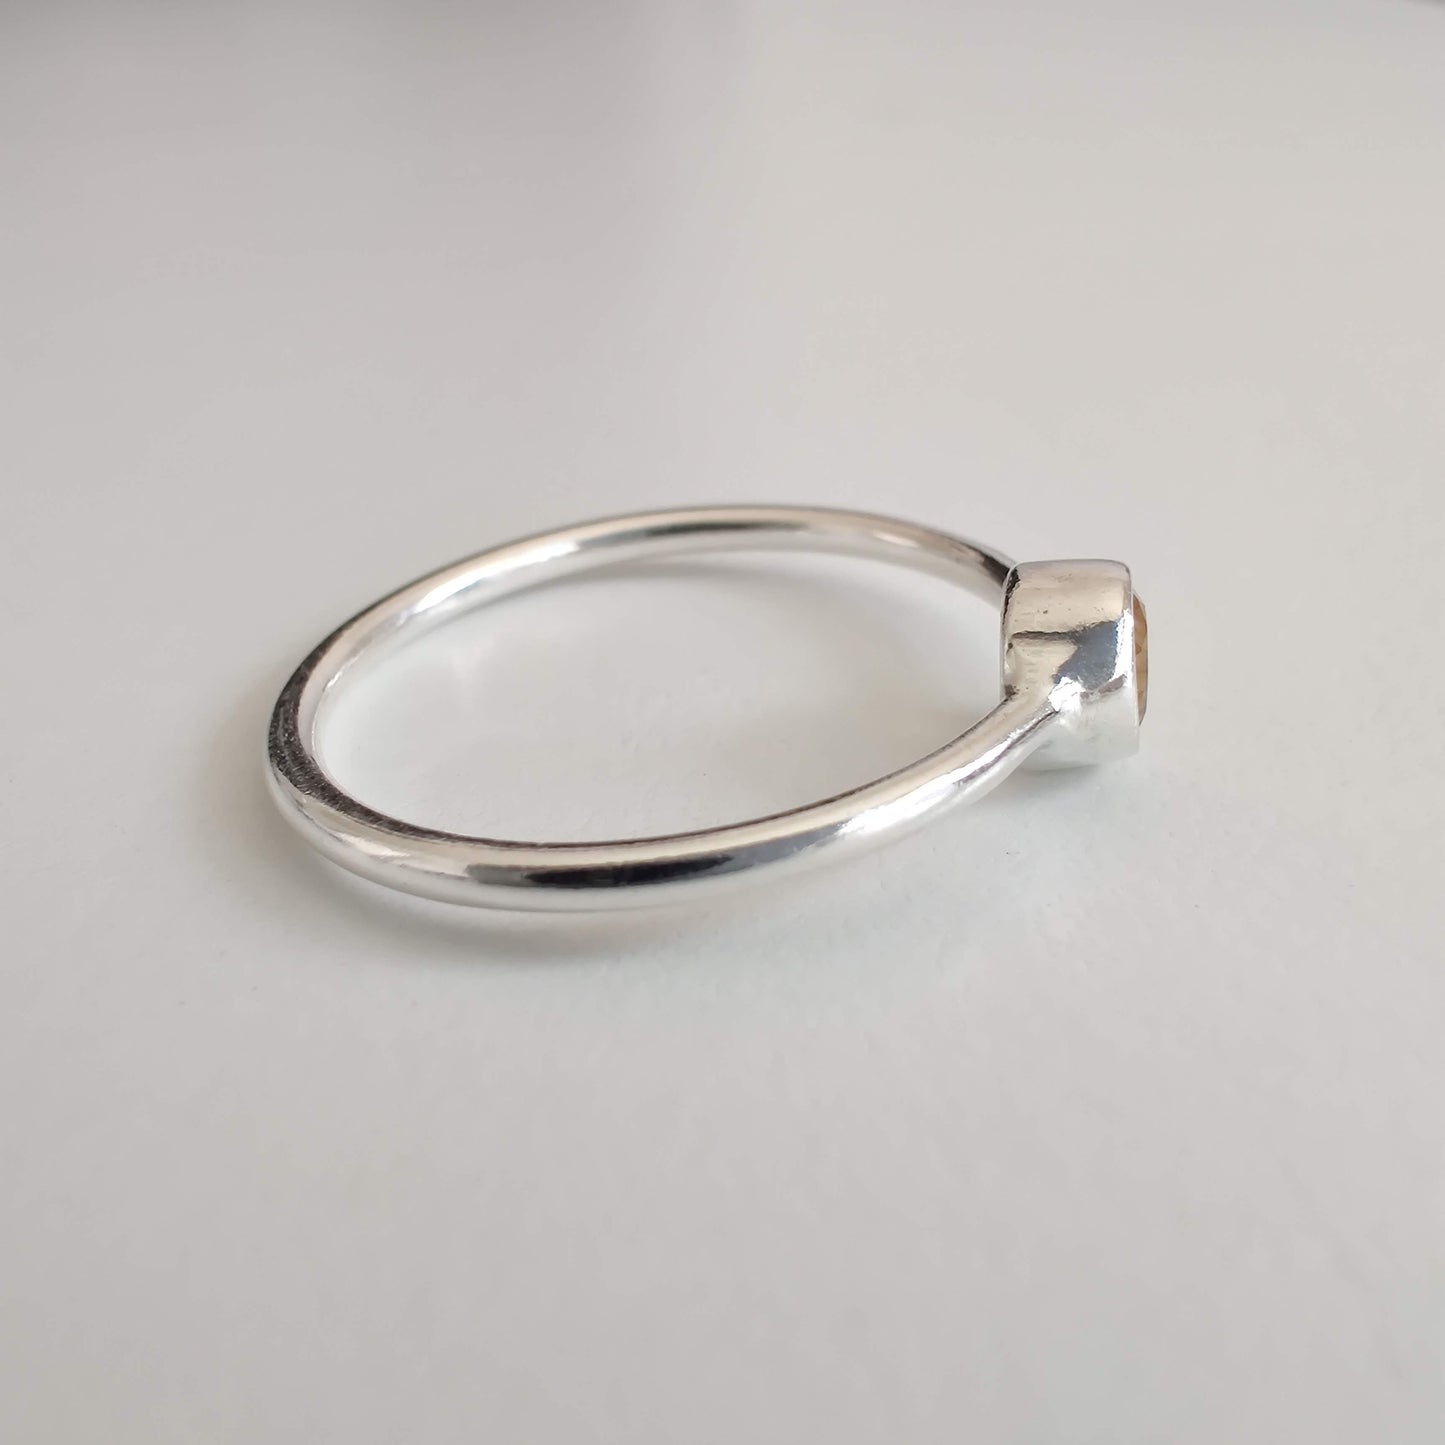 Citrine Delicate 925 Sterling Silver Ring - Rivendell Shop